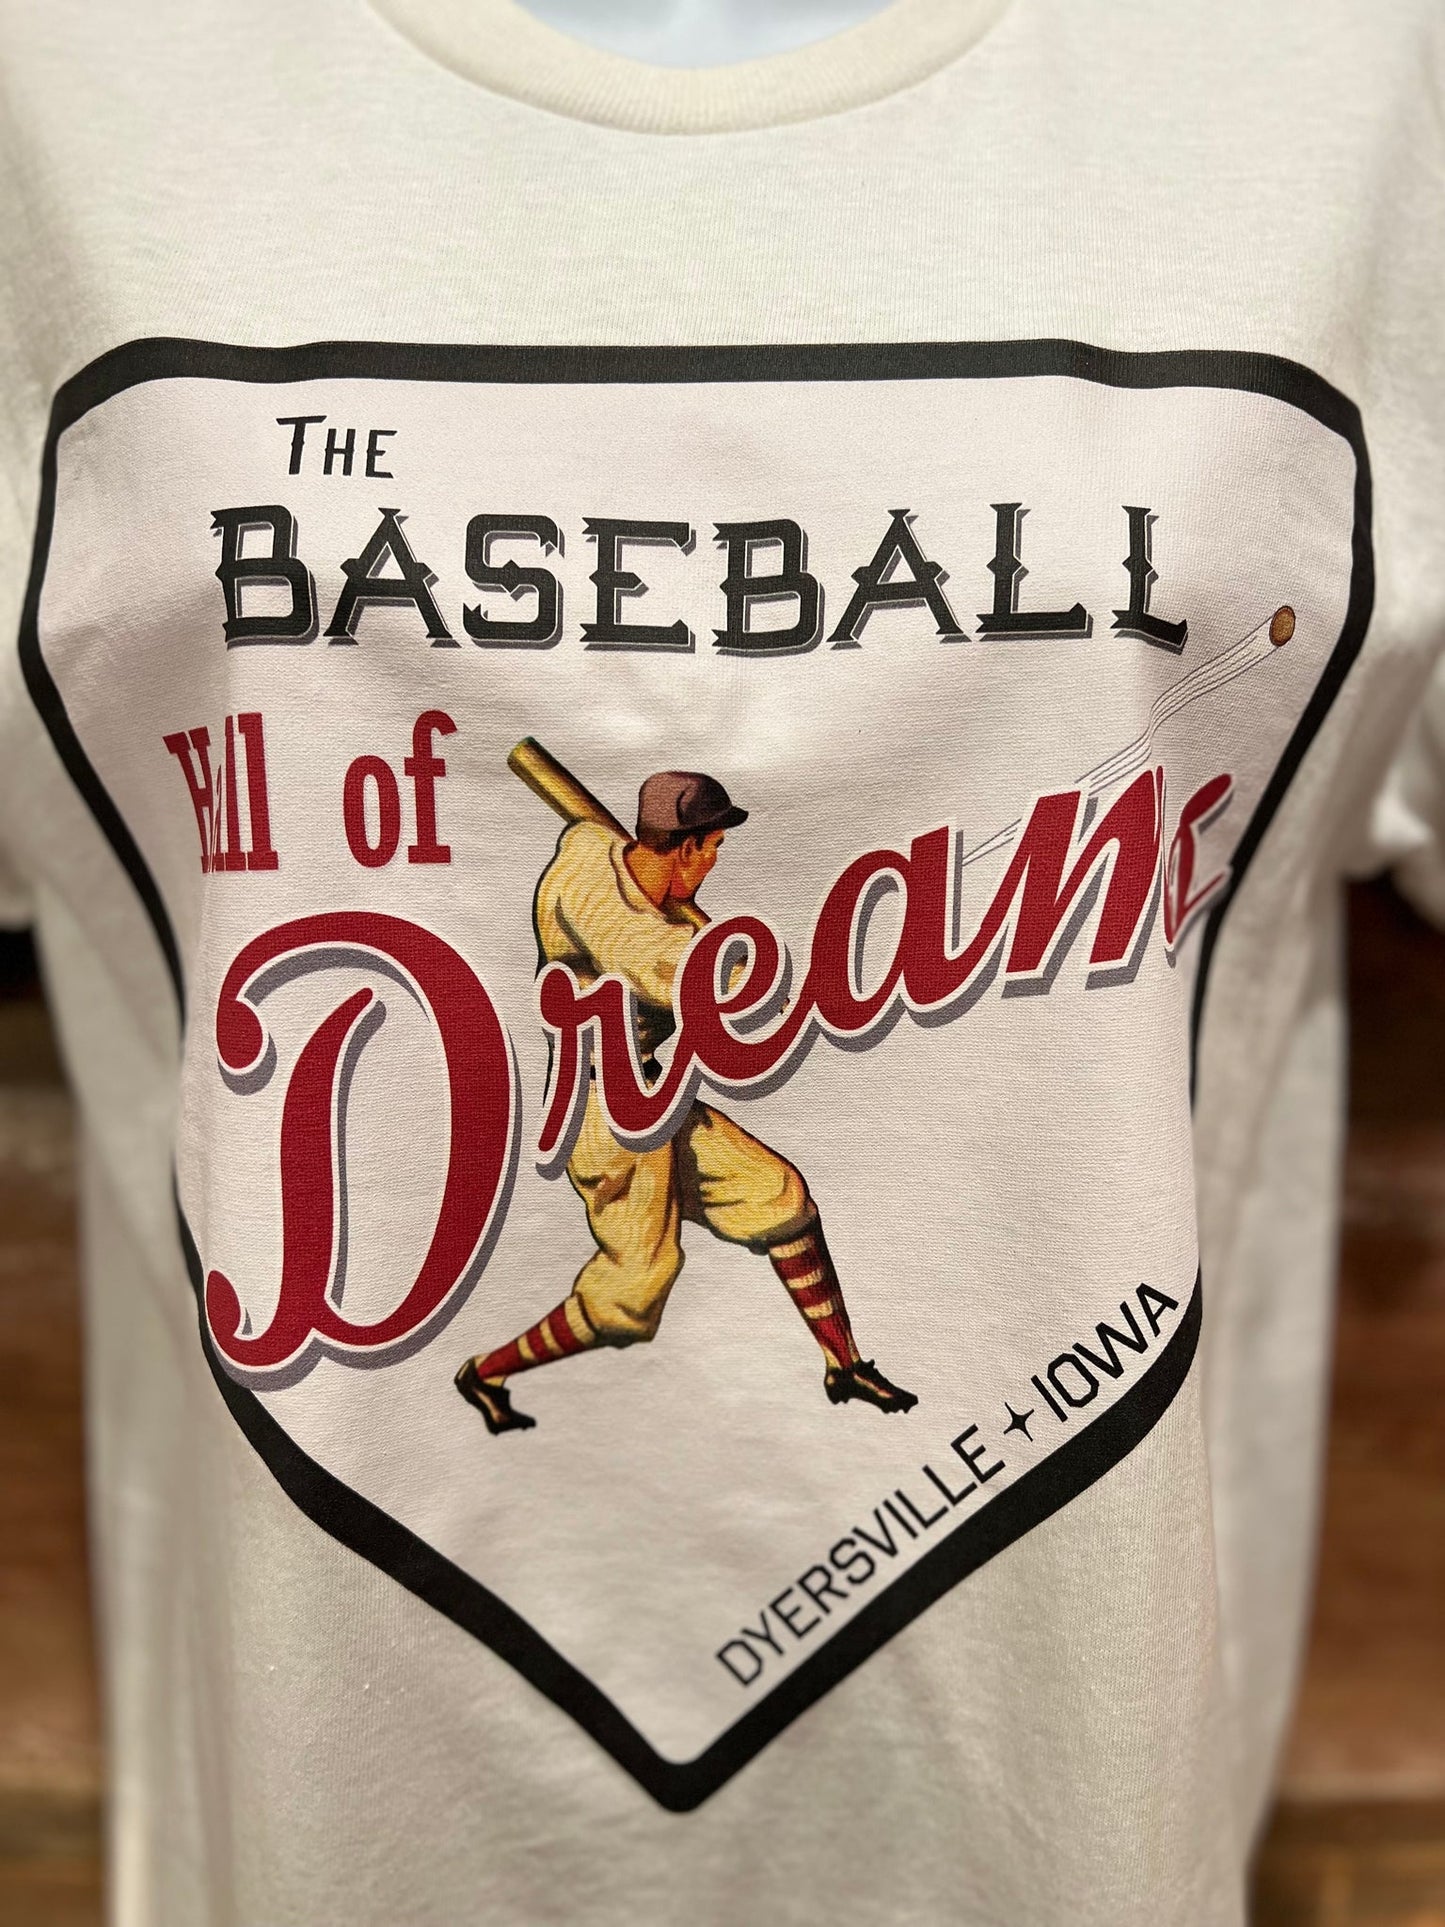 Hall of Dreams Sayings Tshirts (Dyersville Edition - Mays, Berra)